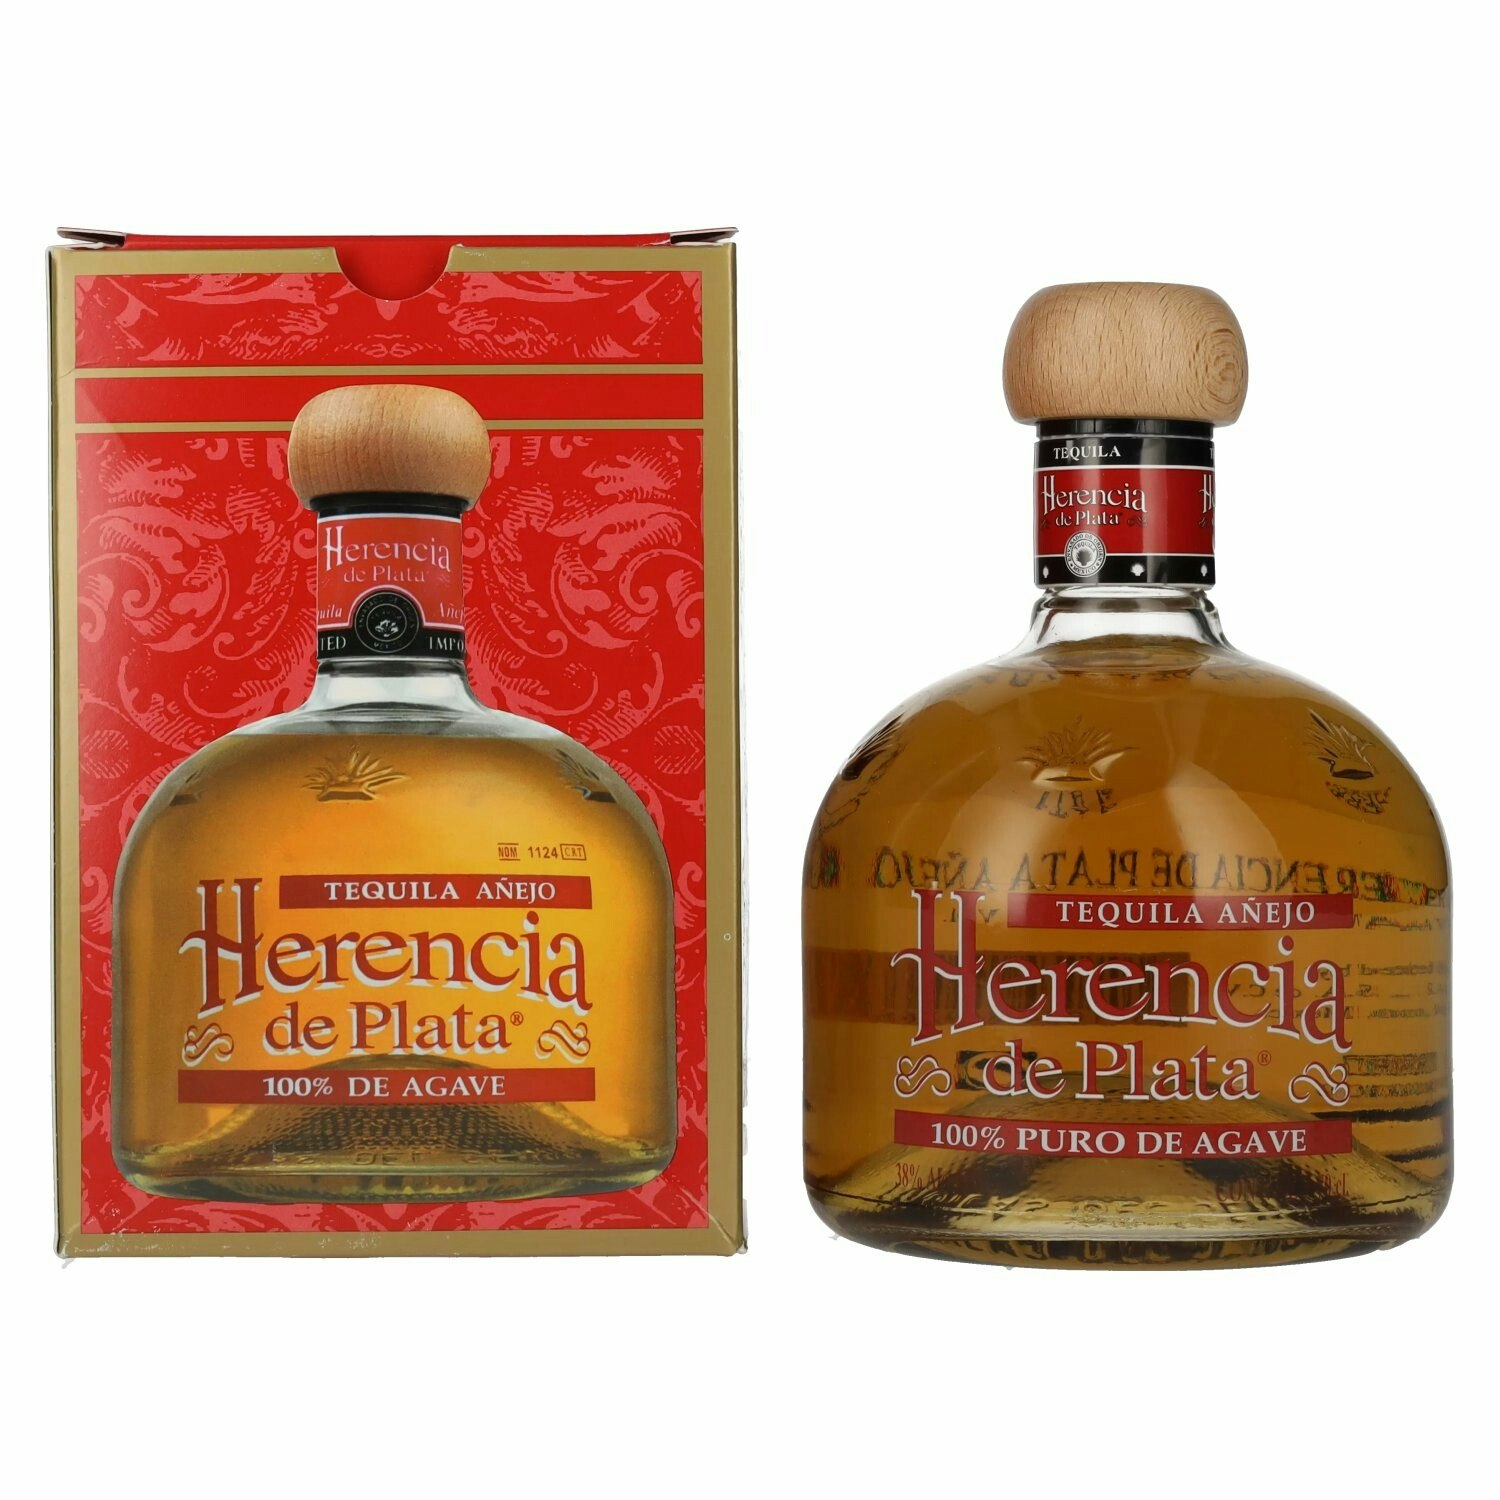 Herencia de Plata AÑEJO Tequila 100% Puro de Agave 38% Vol. 0,7l in Giftbox